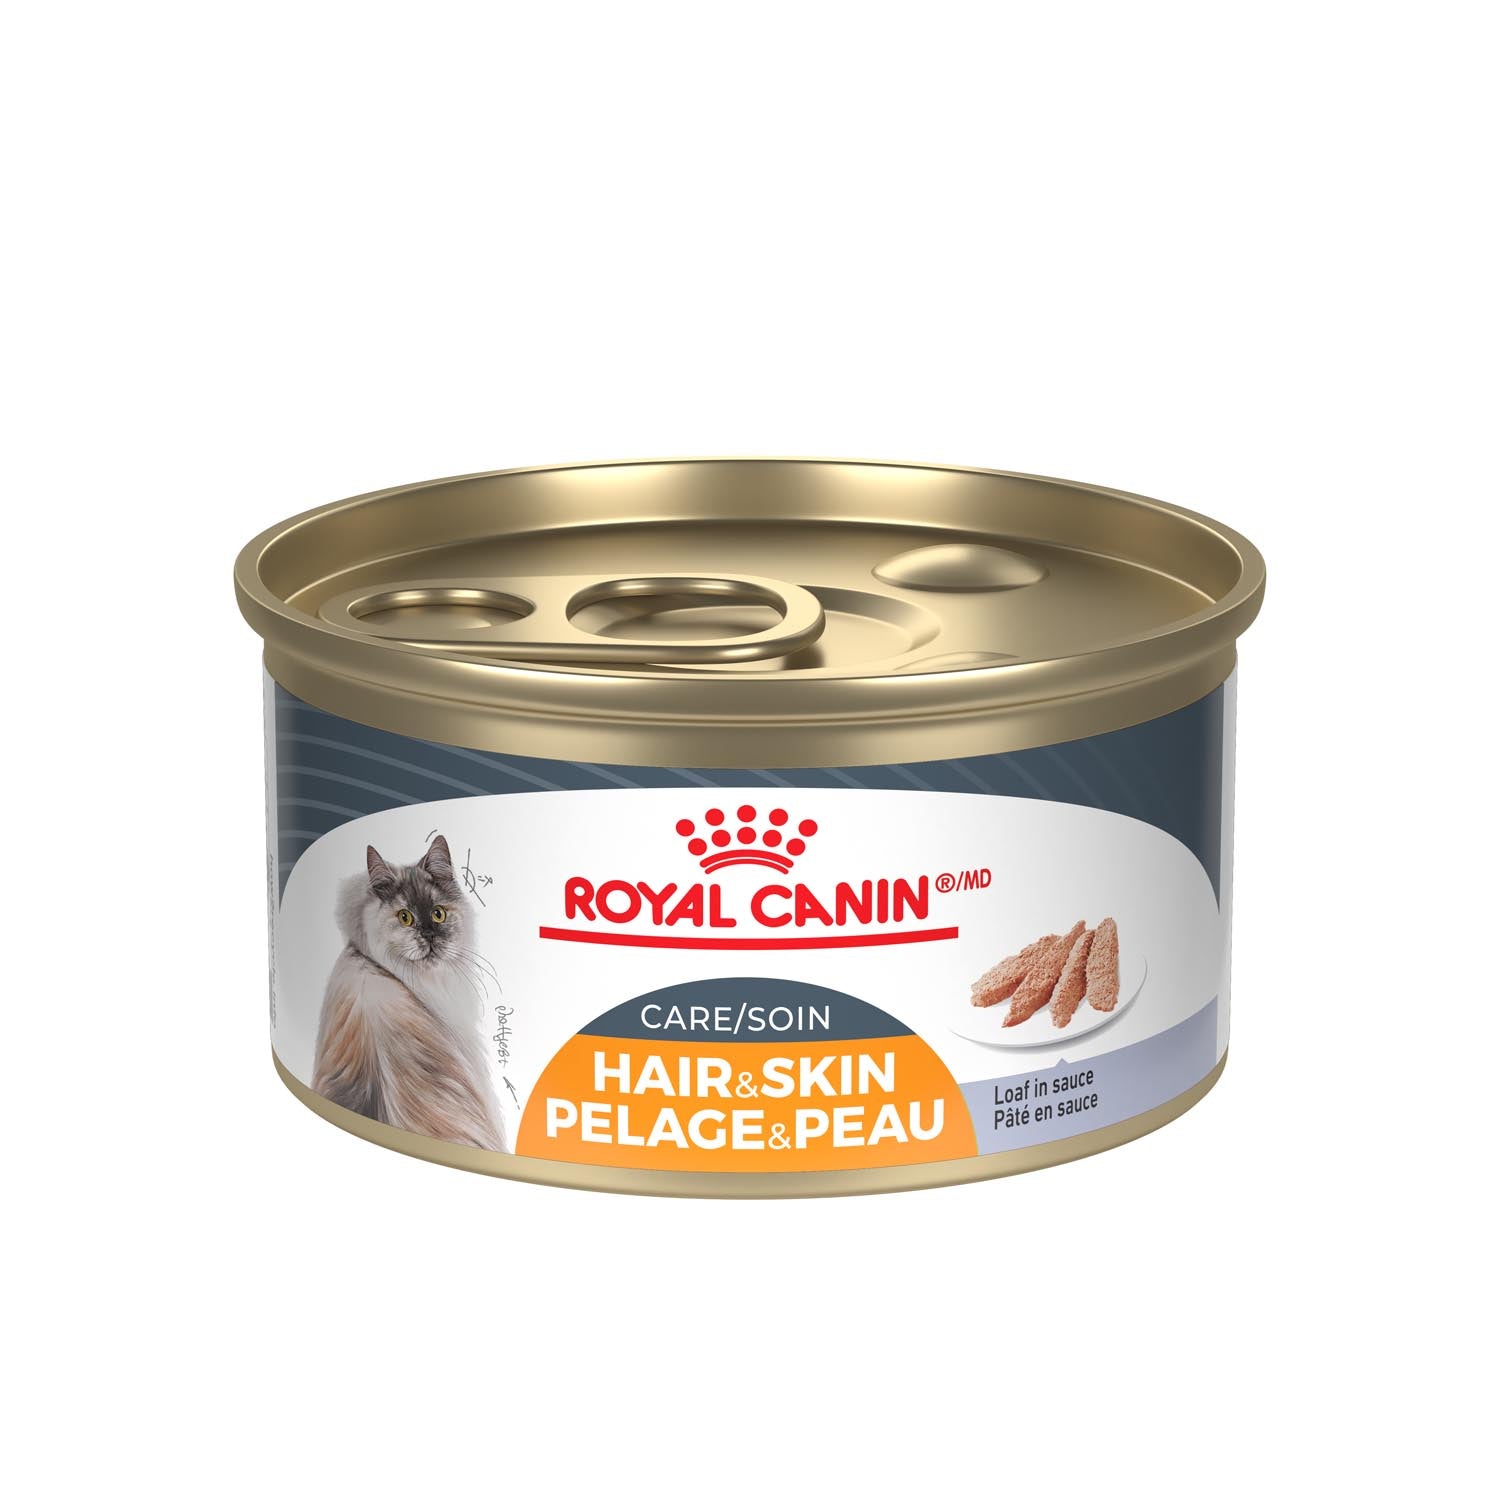 Royal Canin care hair & skin - Loaf in sauce 85g